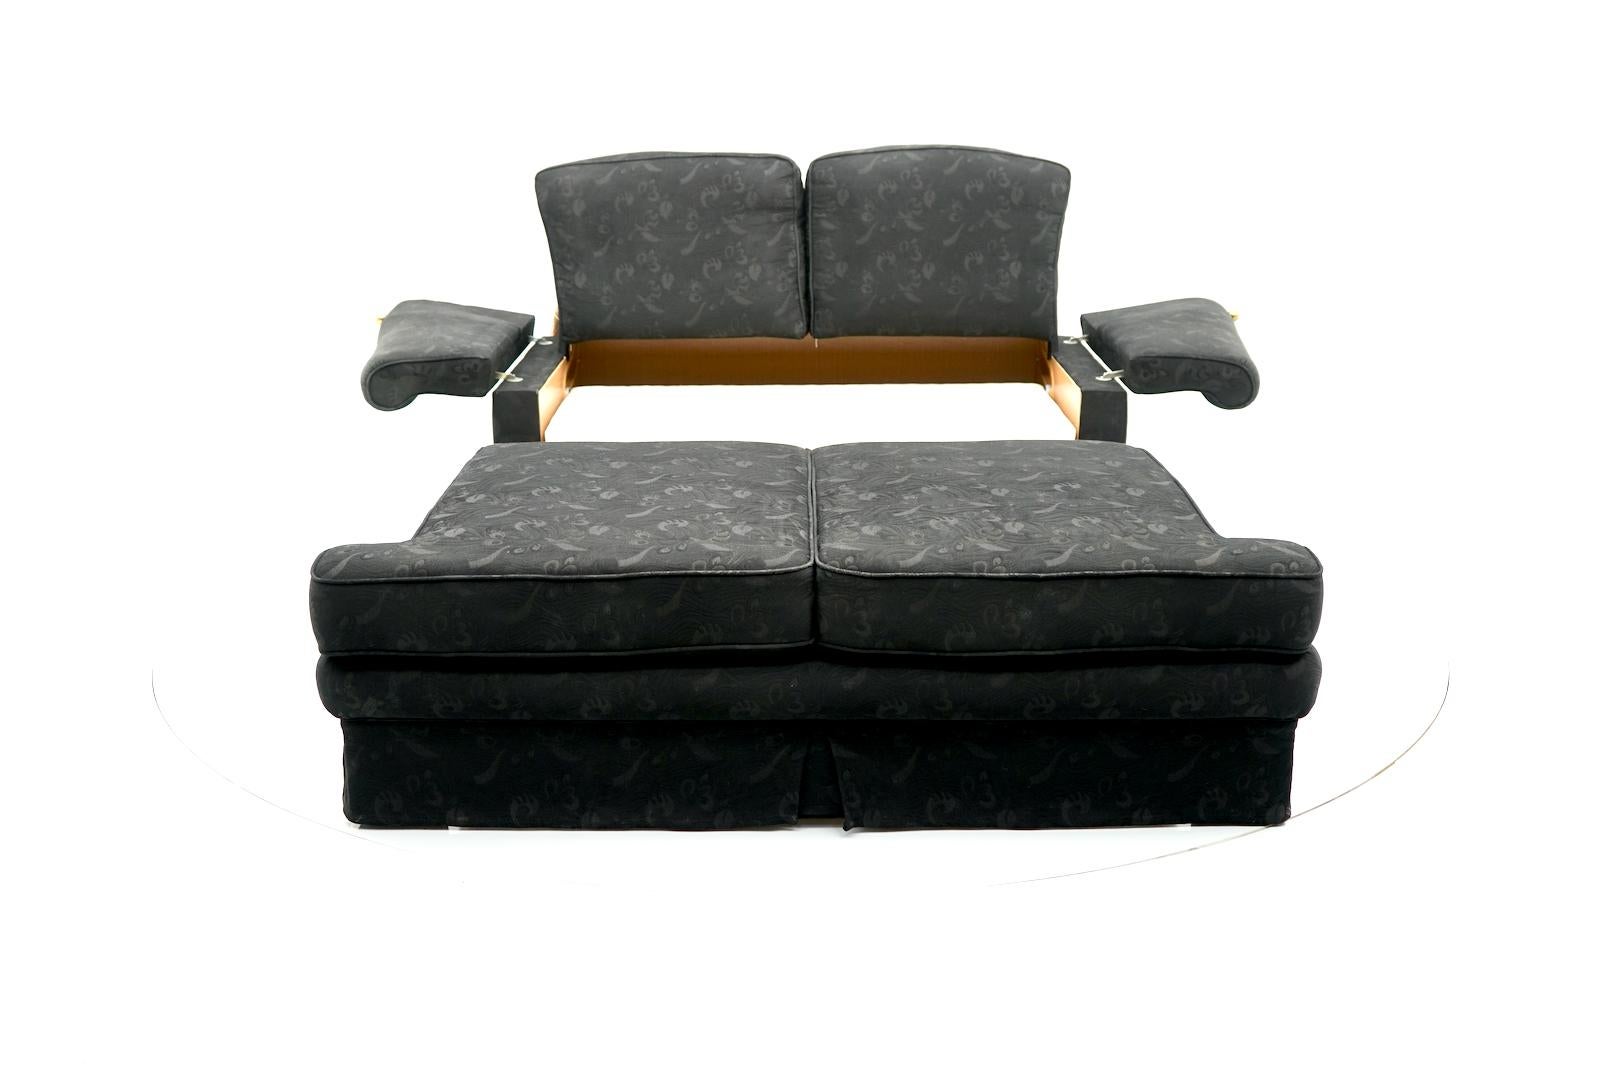 Maison Jansen Two Seat Sofa Bed Black Fabric 1980s Vintage Sofa For Sale 4